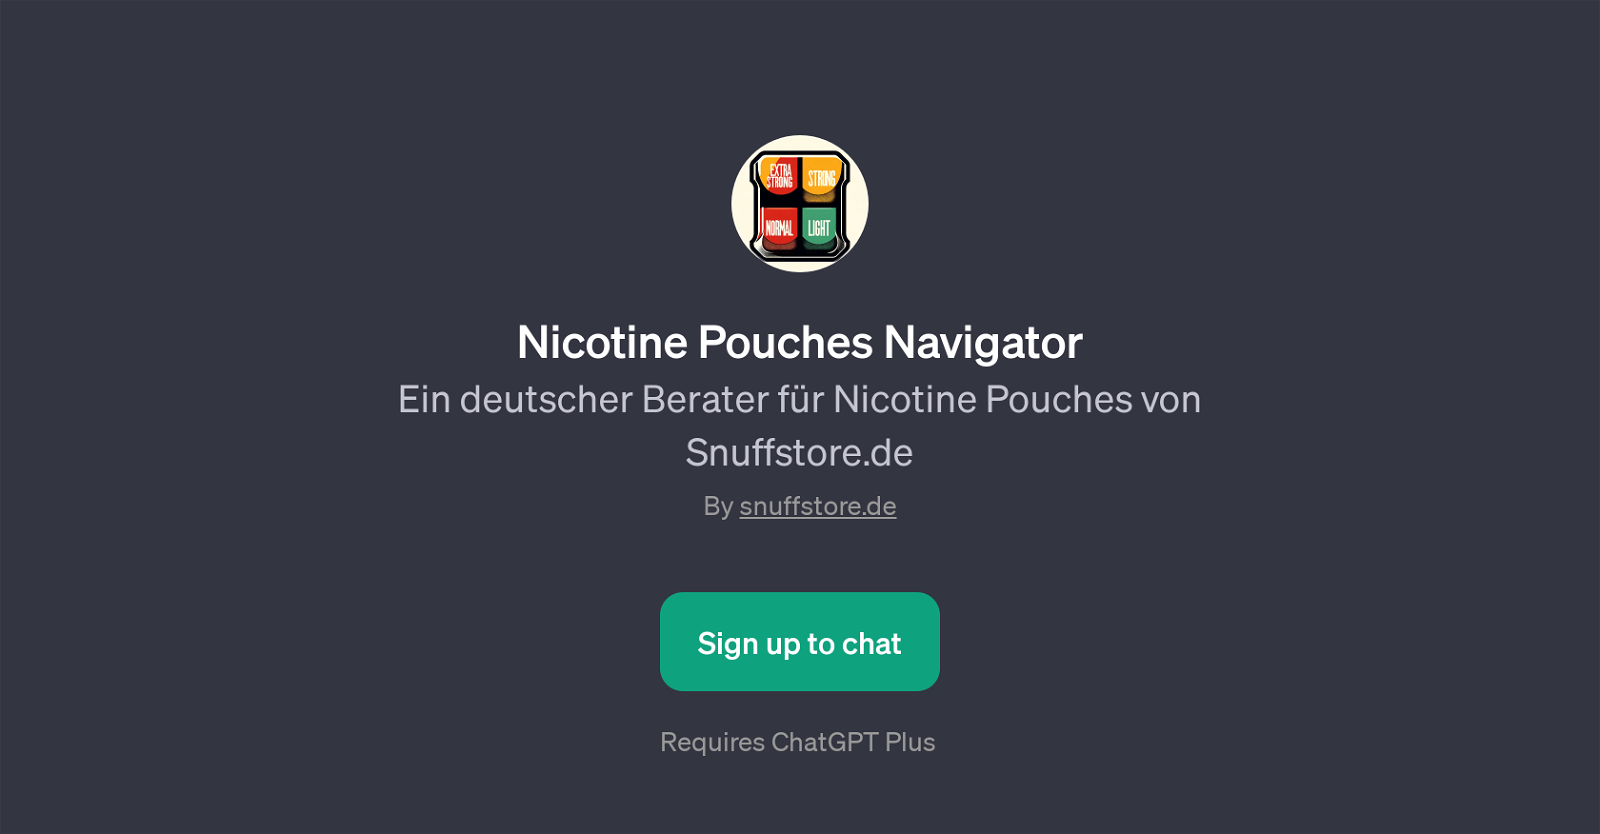 Nicotine Pouches Navigator website